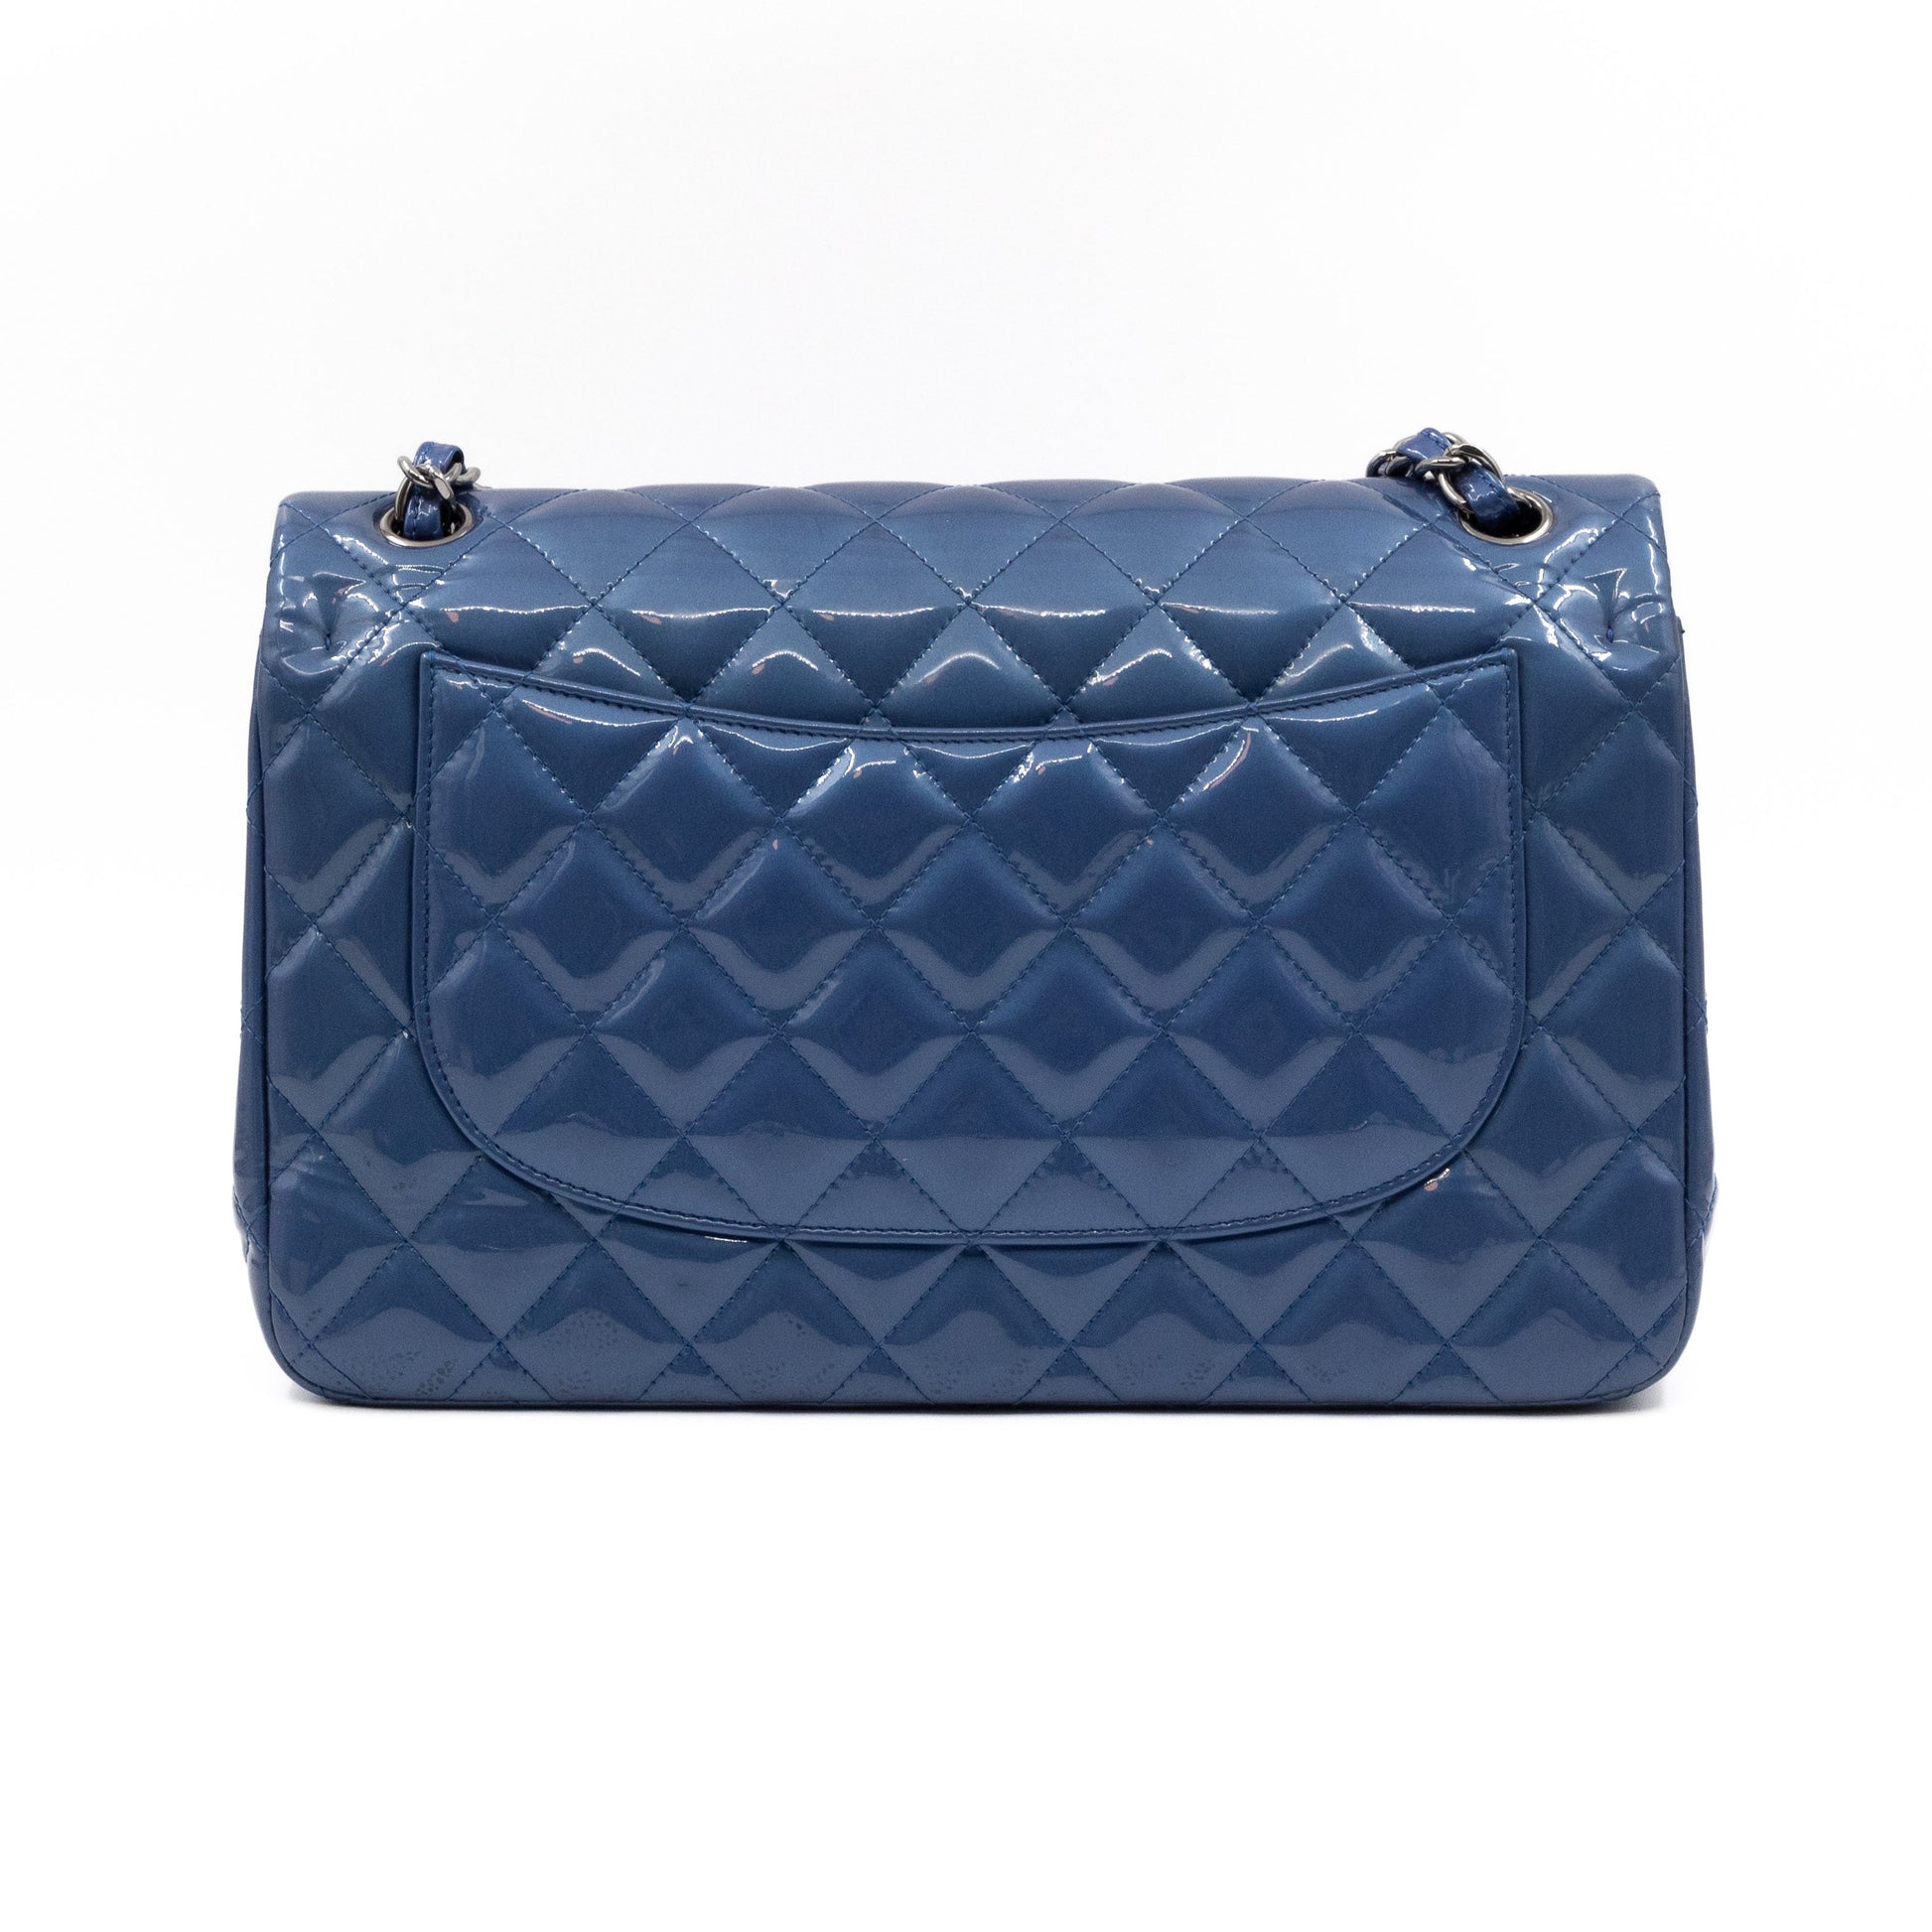 Refinish Royal Blue Chanel Bag